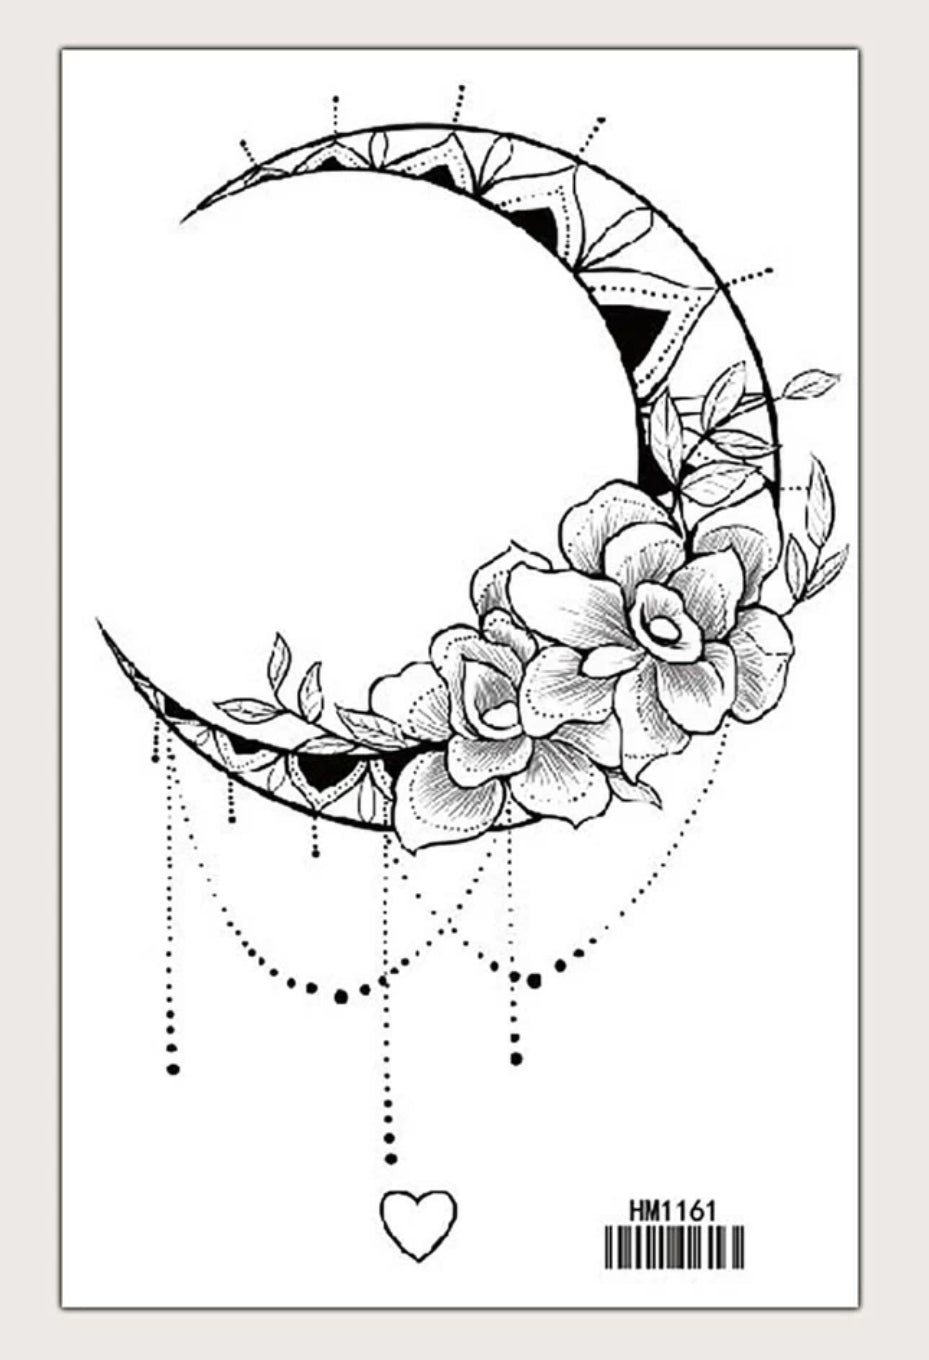 Flower & Moon Pattern Tattoo Sticker